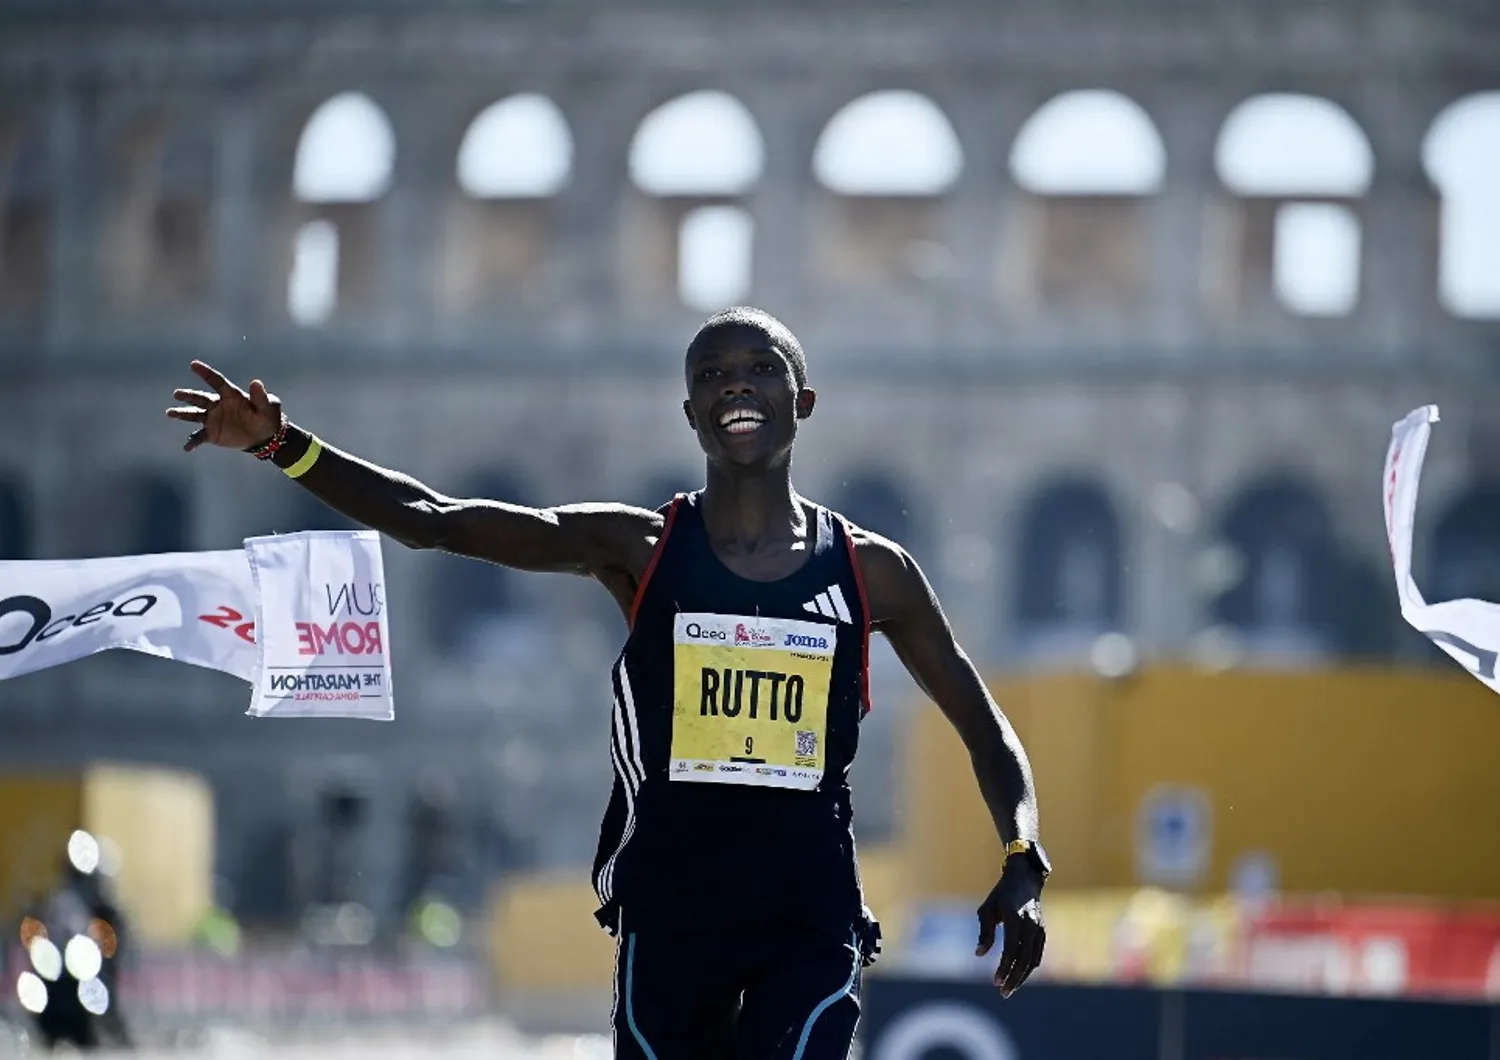 Kenya’s Asbel Rutto Breaks Record to Win Rome Marathon